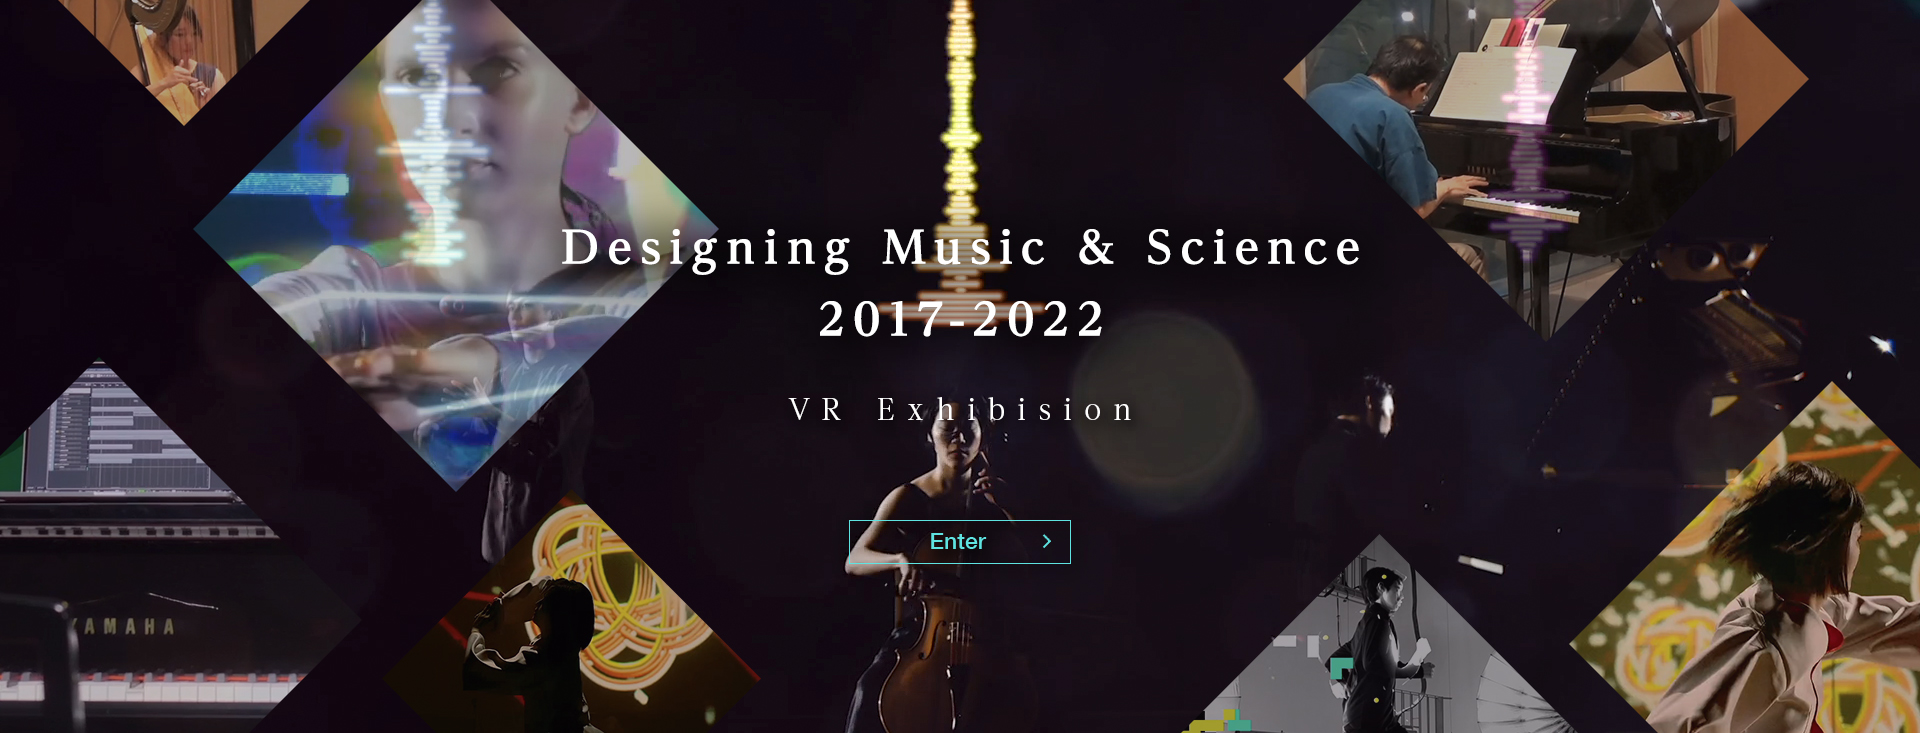 Designing Music & Science [2017-2022] Exihibition in Shoukan